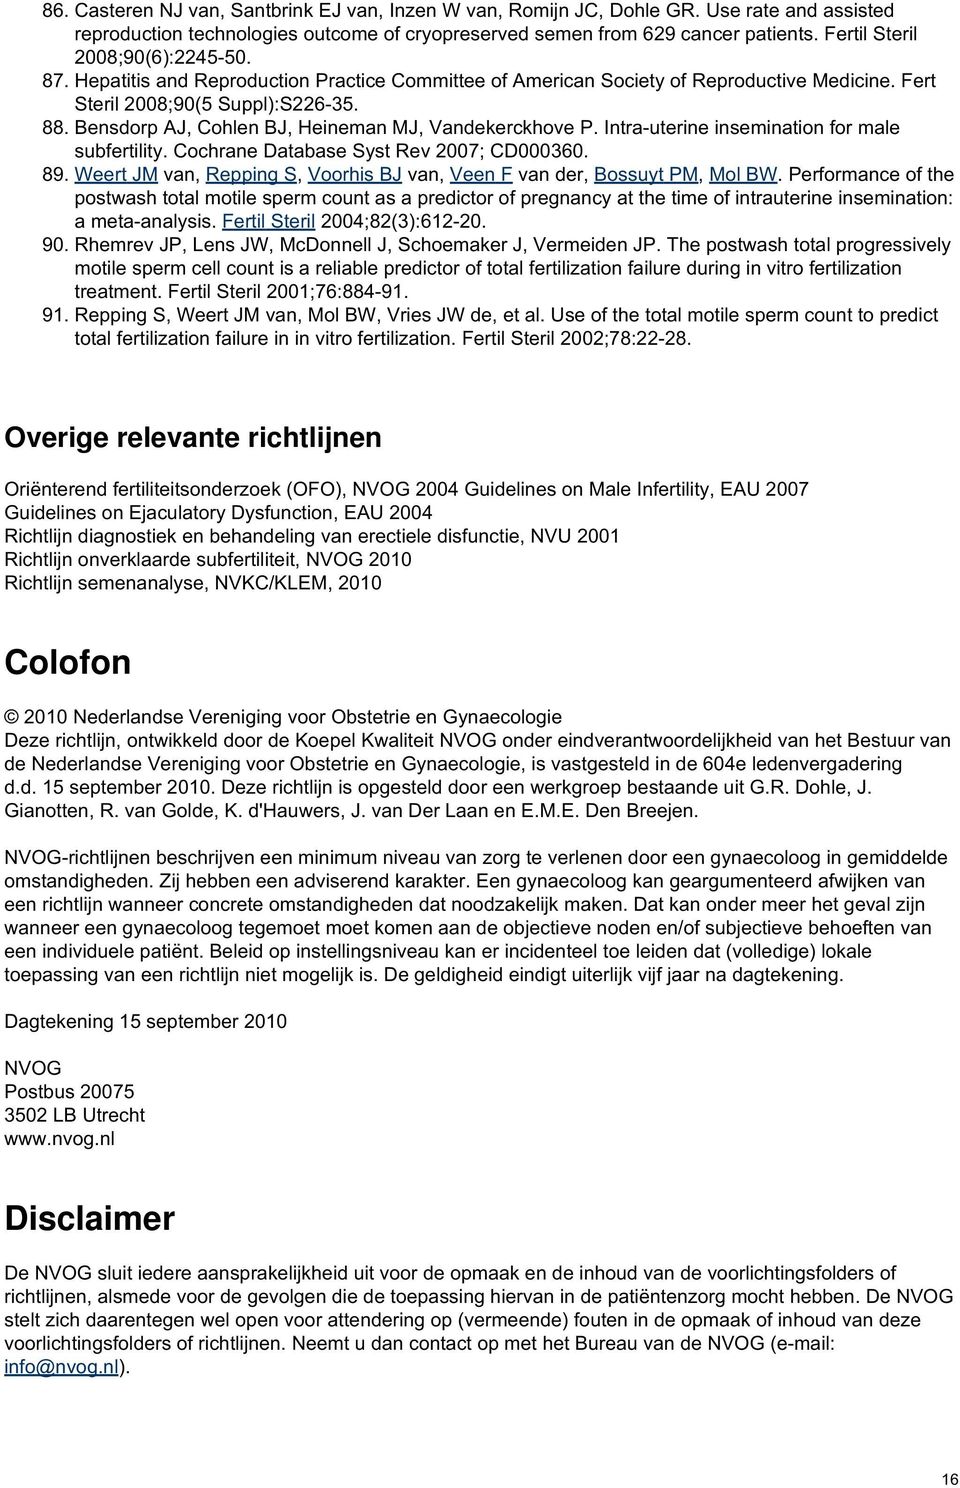 Bensdorp AJ, Cohlen BJ, Heineman MJ, Vandekerckhove P. Intra-uterine insemination for male subfertility. Cochrane Database Syst Rev 2007; CD000360. 89.